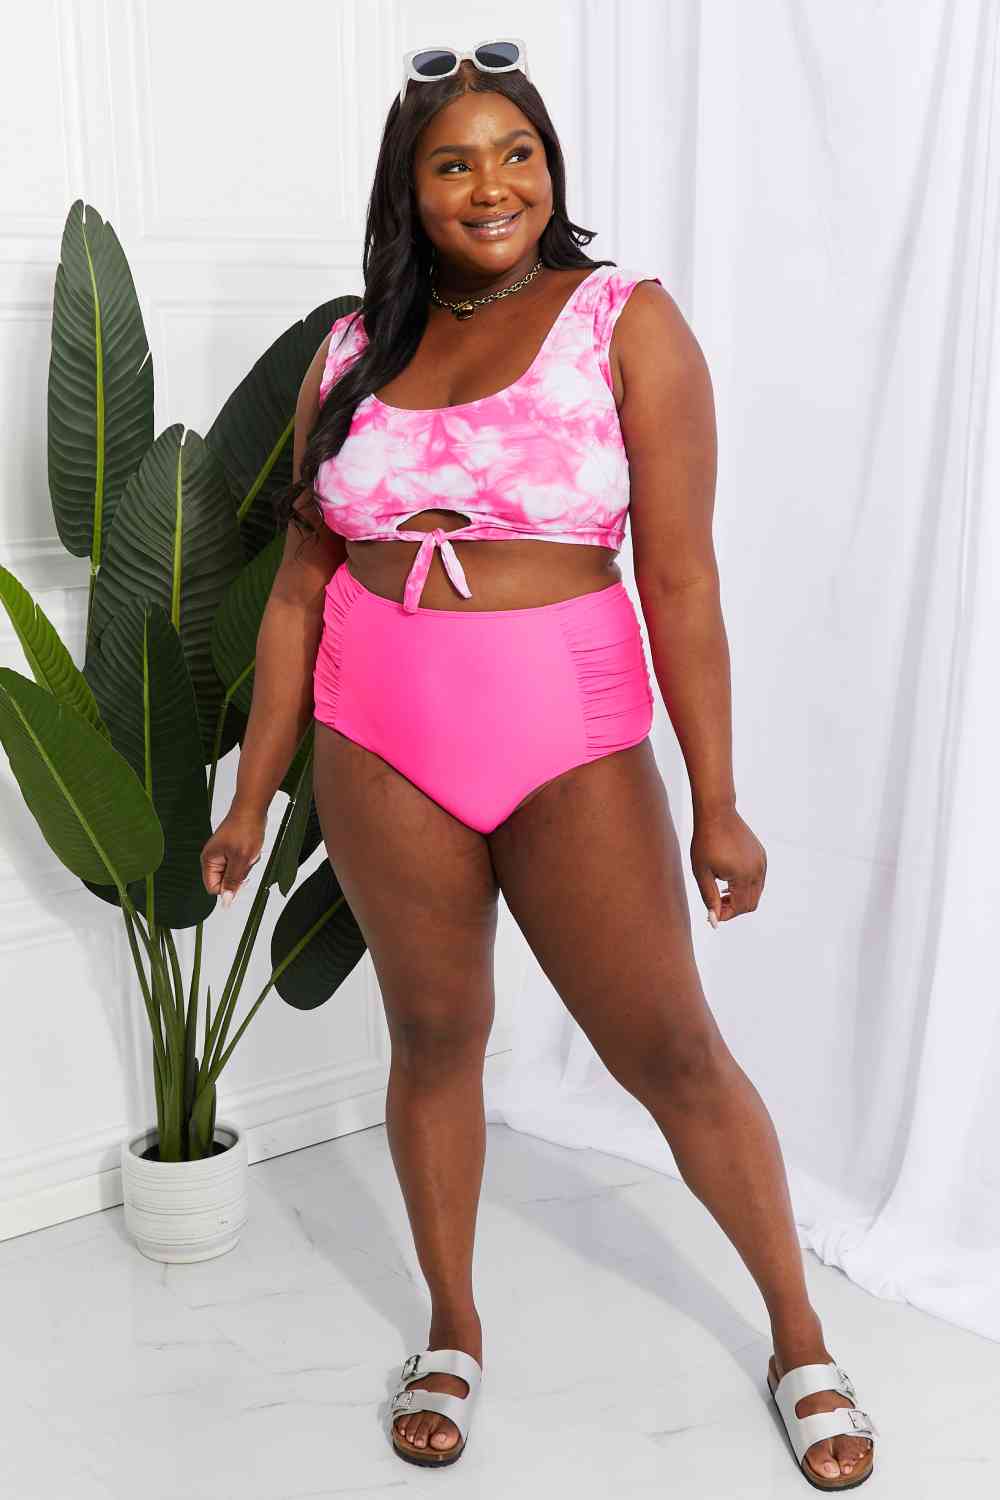 Women's Marina West Swim Sanibel Crop Swim Top and Ruched Bottoms Set in Pink